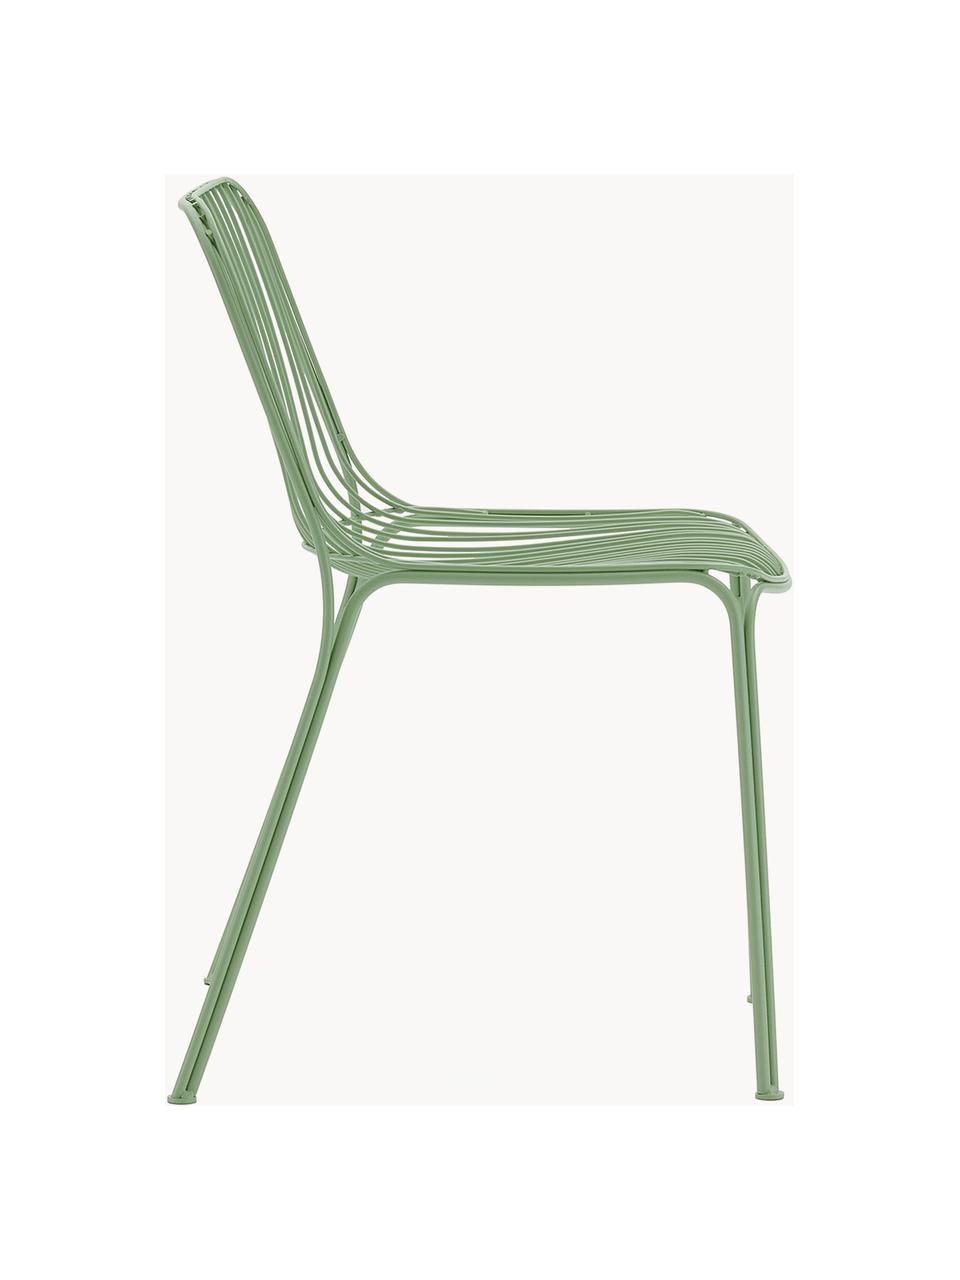 Záhradná stolička Hiray, Pozinkovaná oceľ, lakovaná, Šalviová zelená, Š 53 x H 55 cm